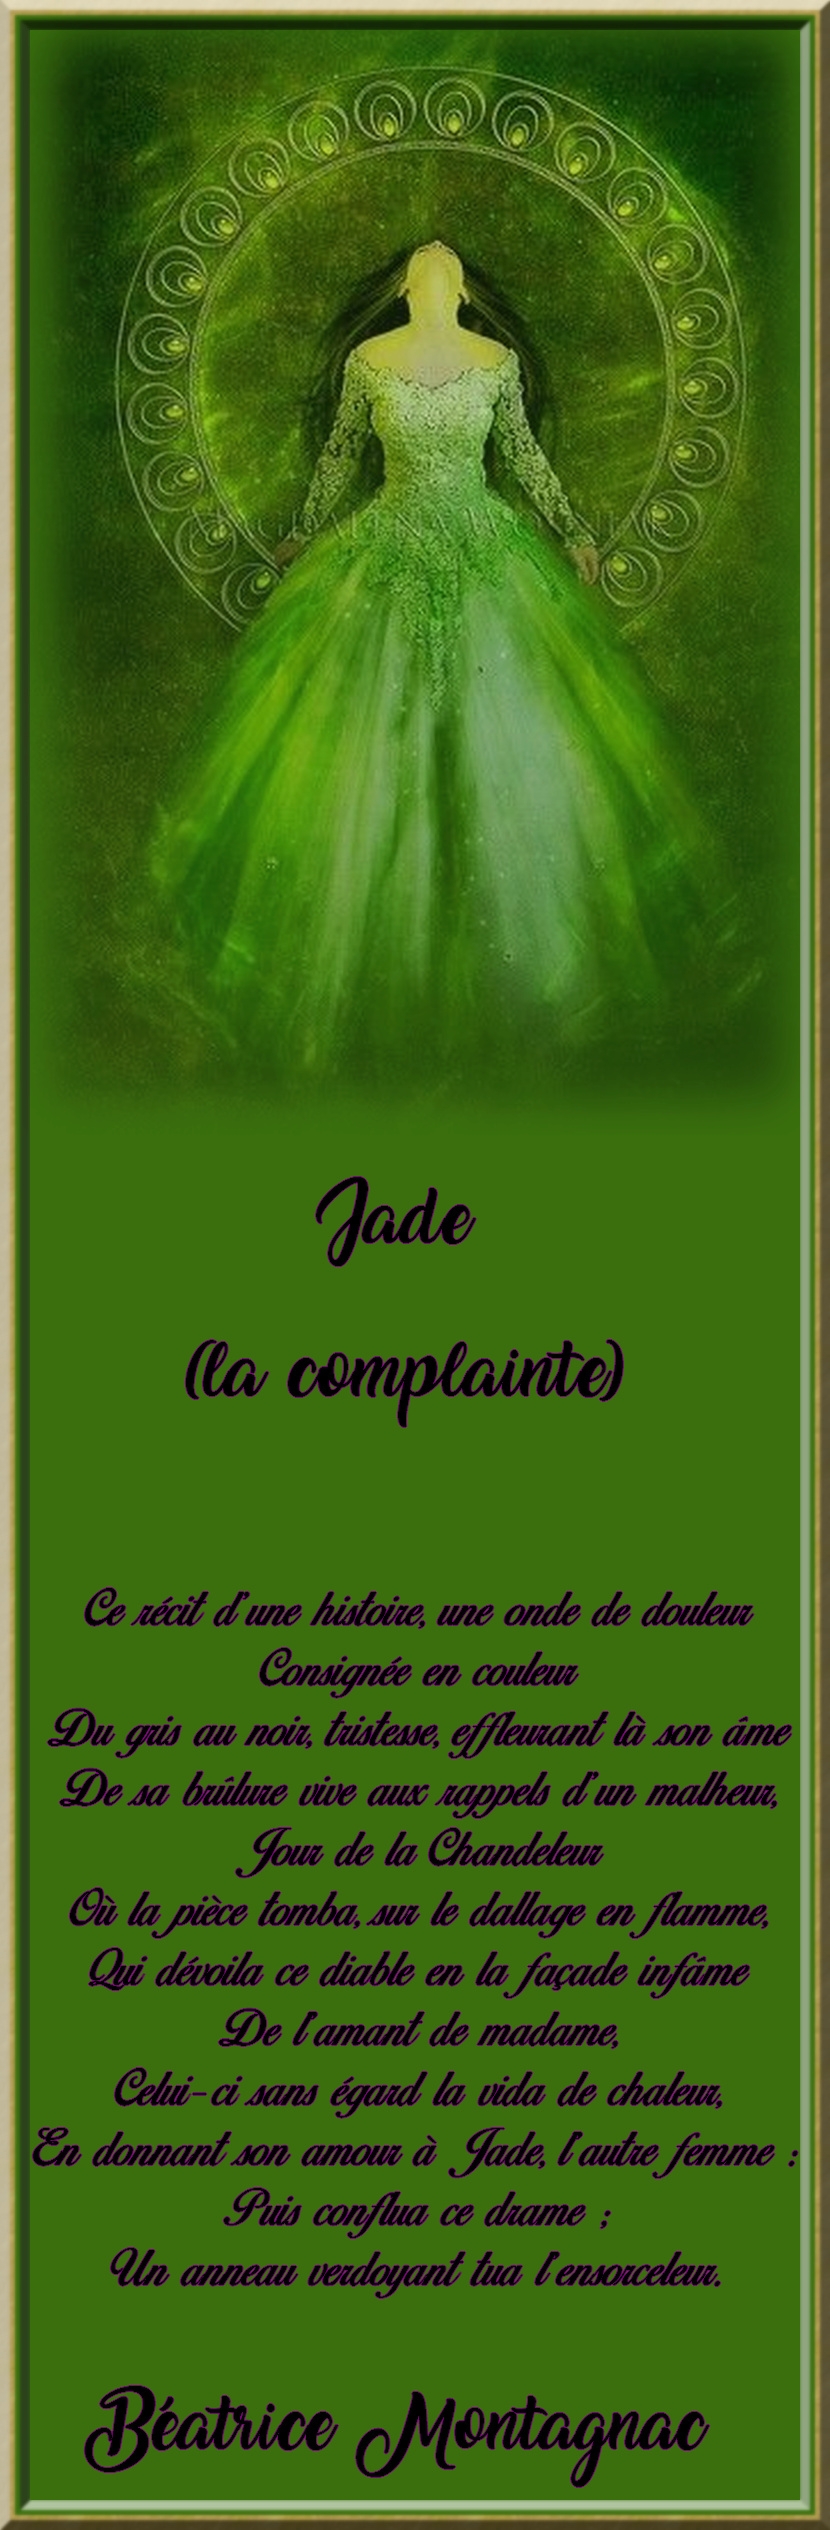 Jade (la complainte) .jpg